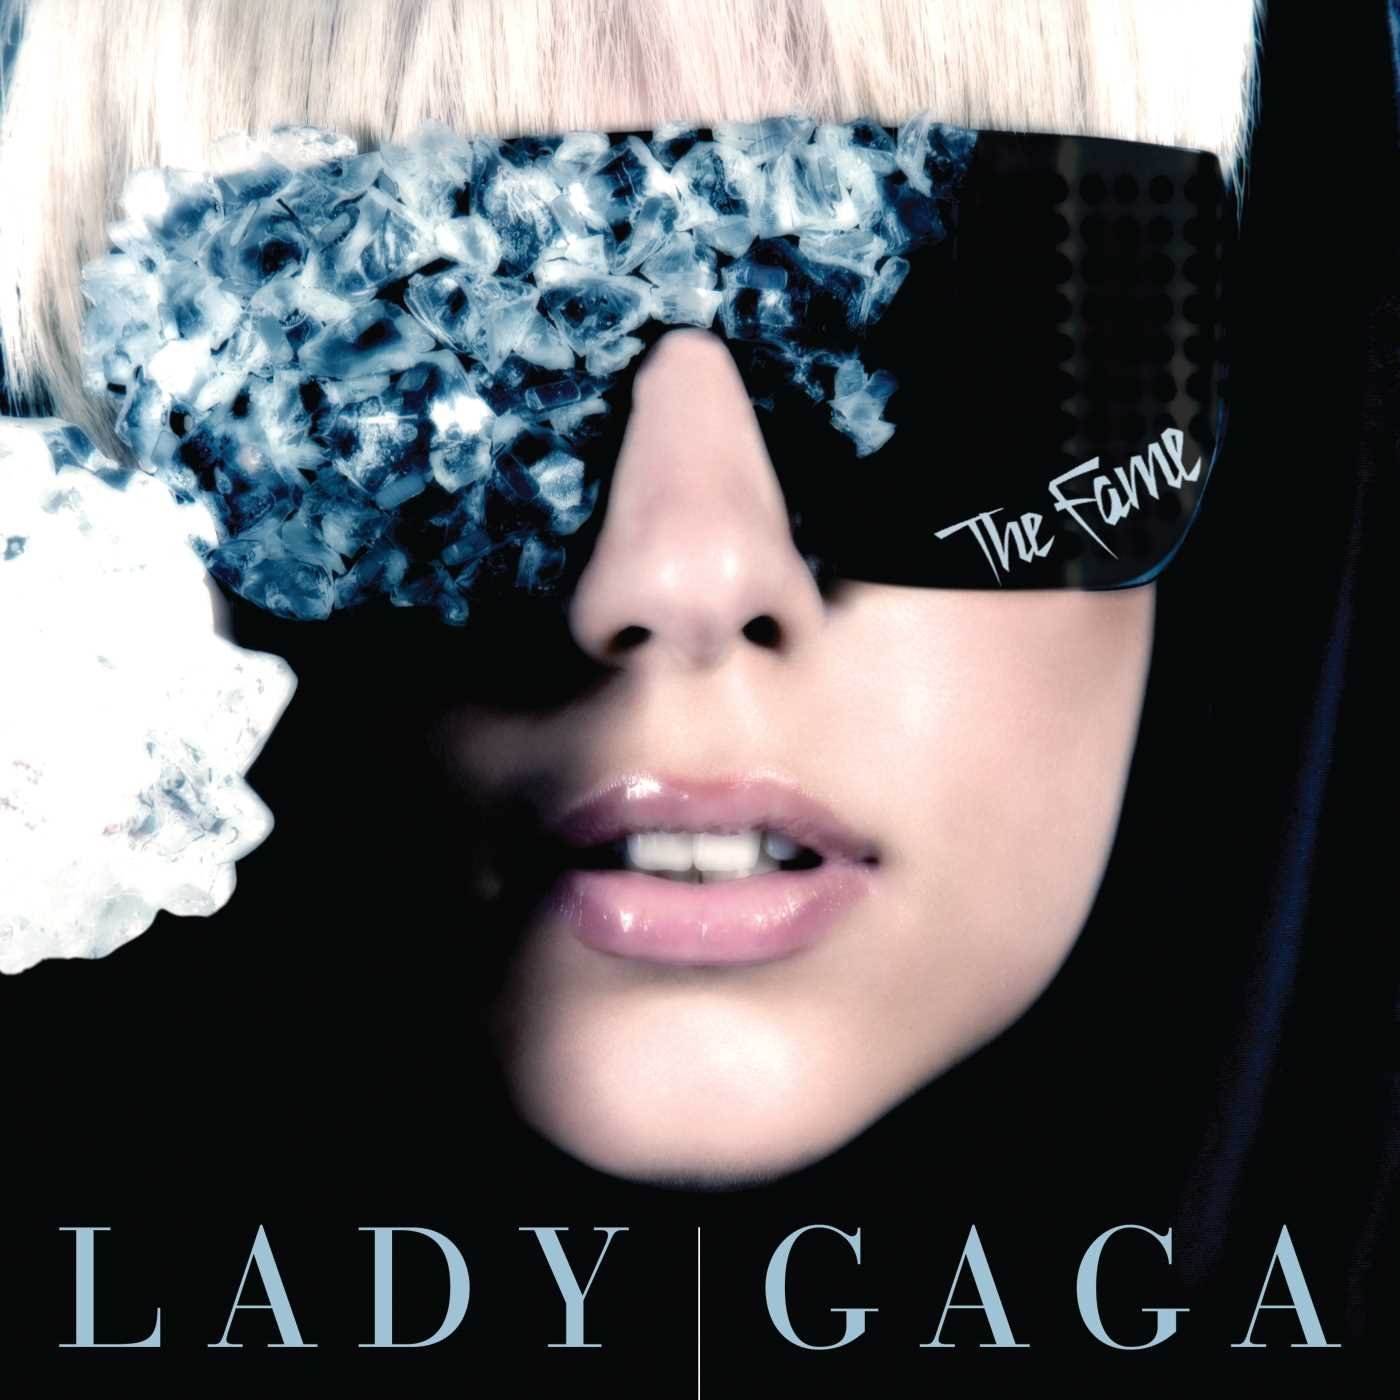 Lady Gaga "The Fame" CD